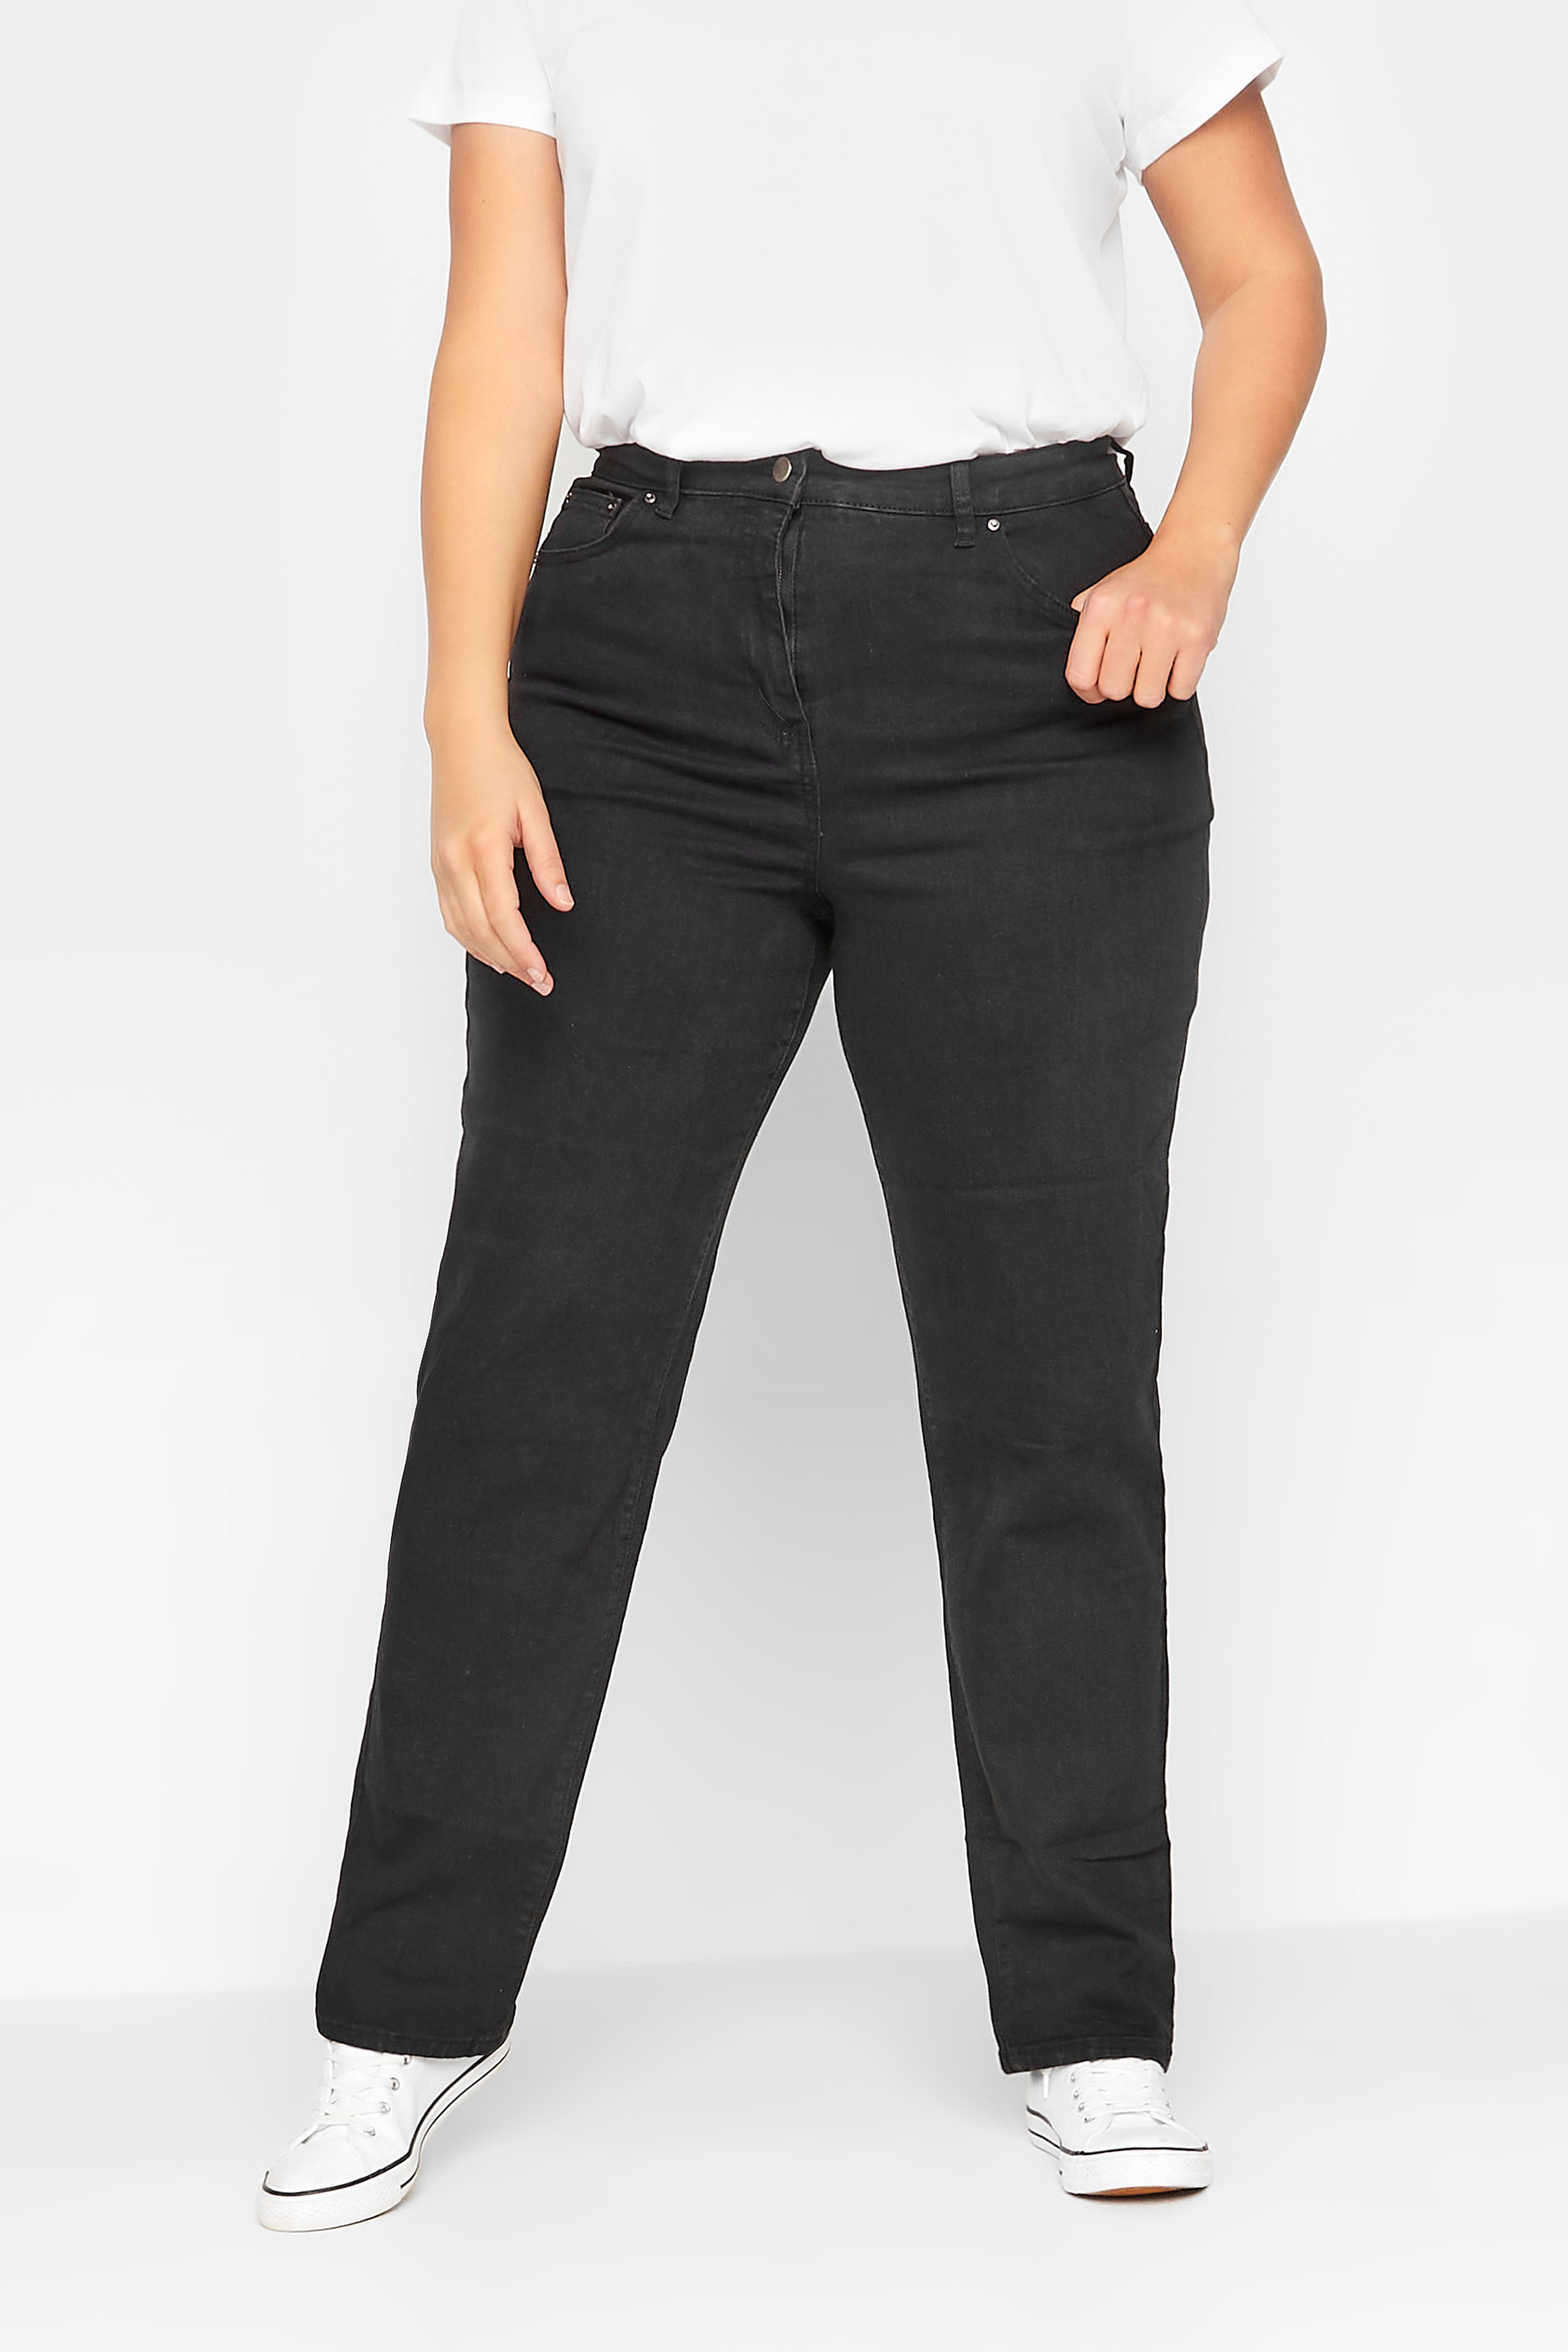 LTS Tall Women's Black Washed UNA Mom Jeans | Long Tall Sally 1